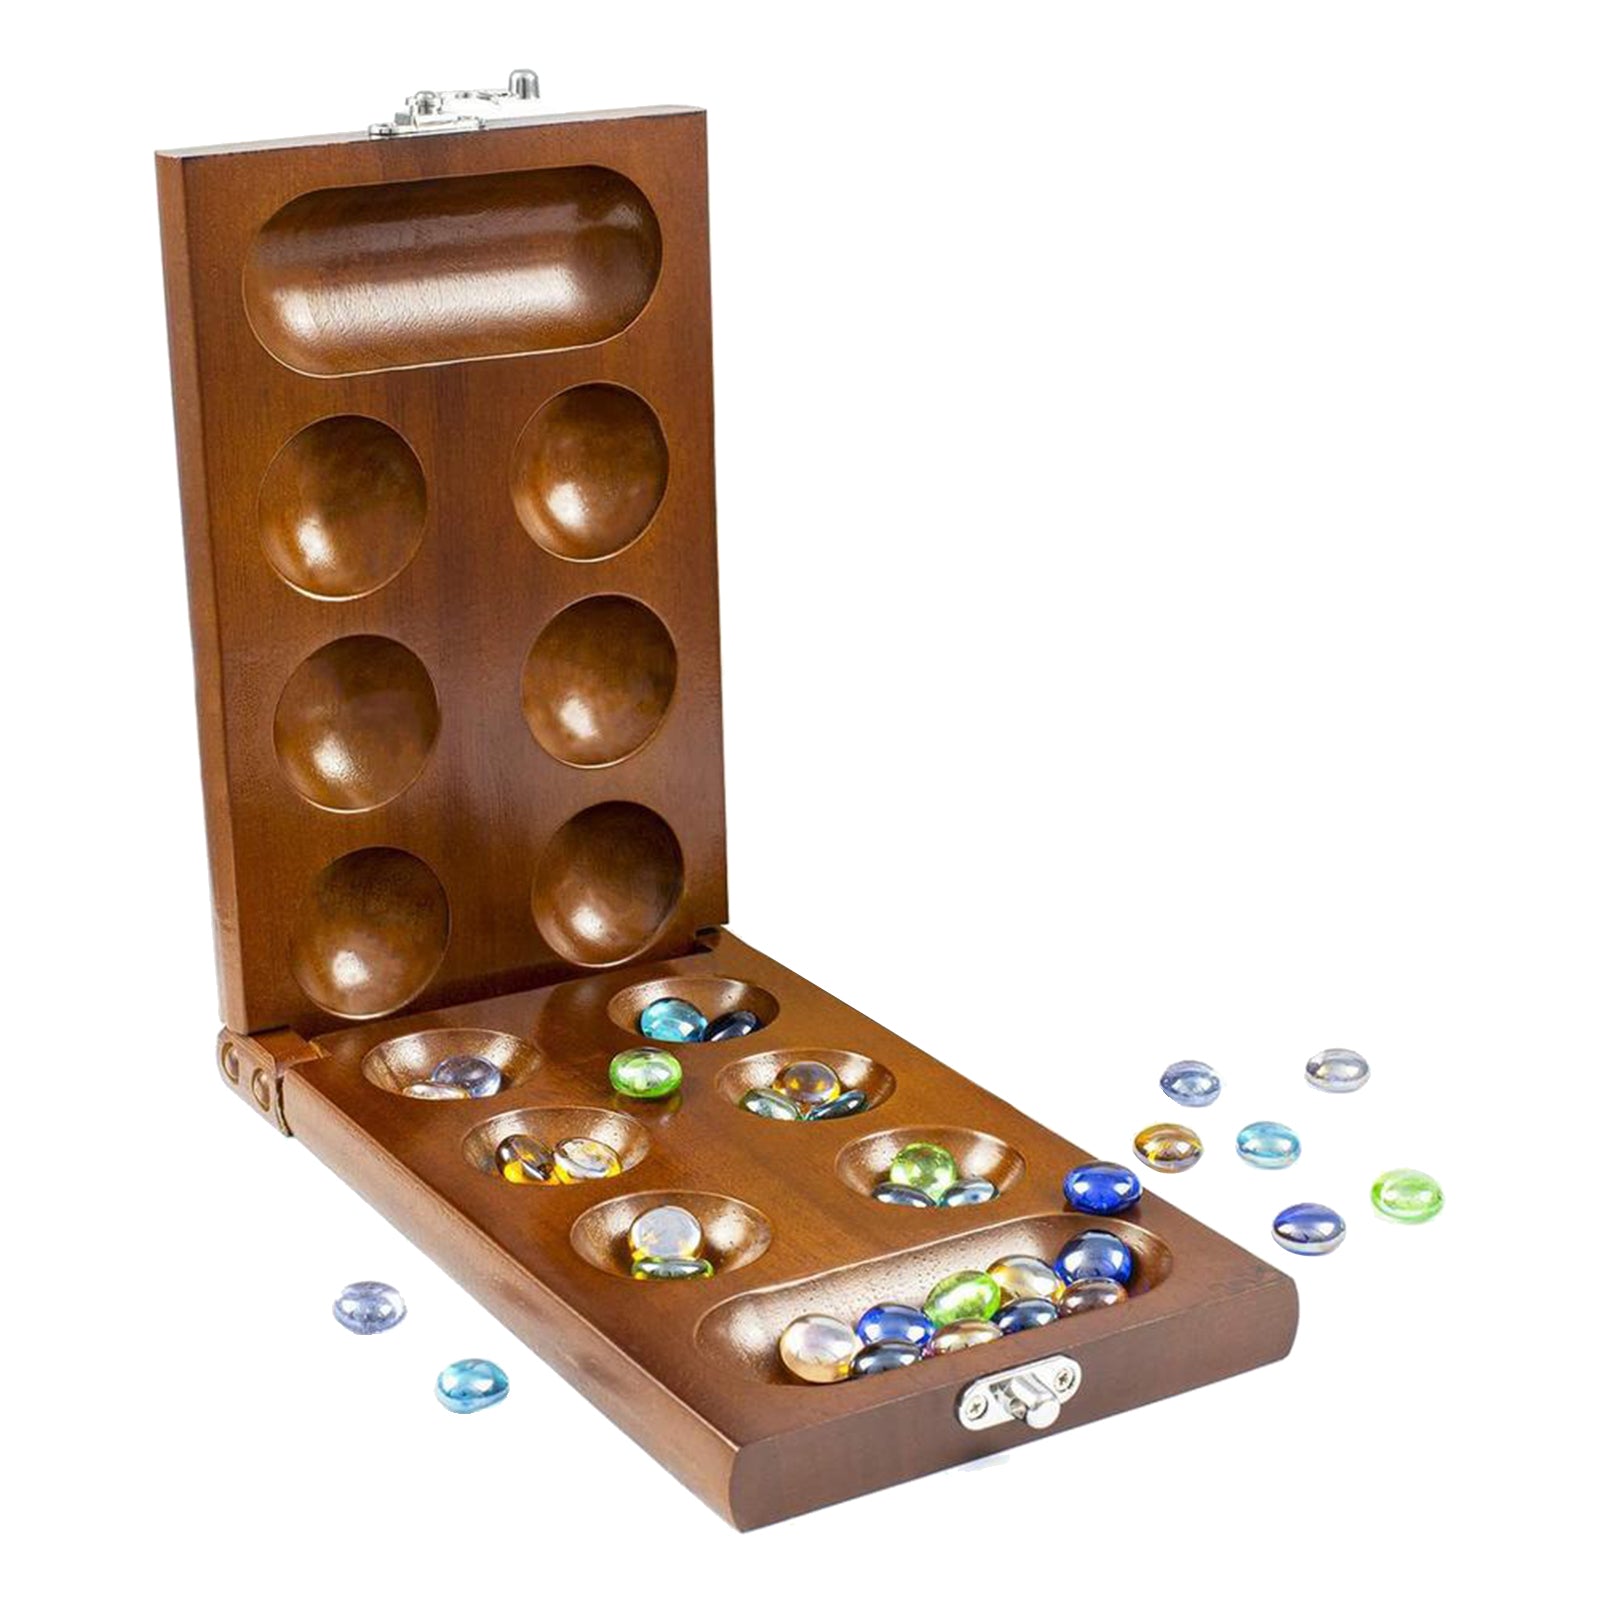 Mancala Strategy Game Wood Folding Board Stones for Adult Children Boys Girl